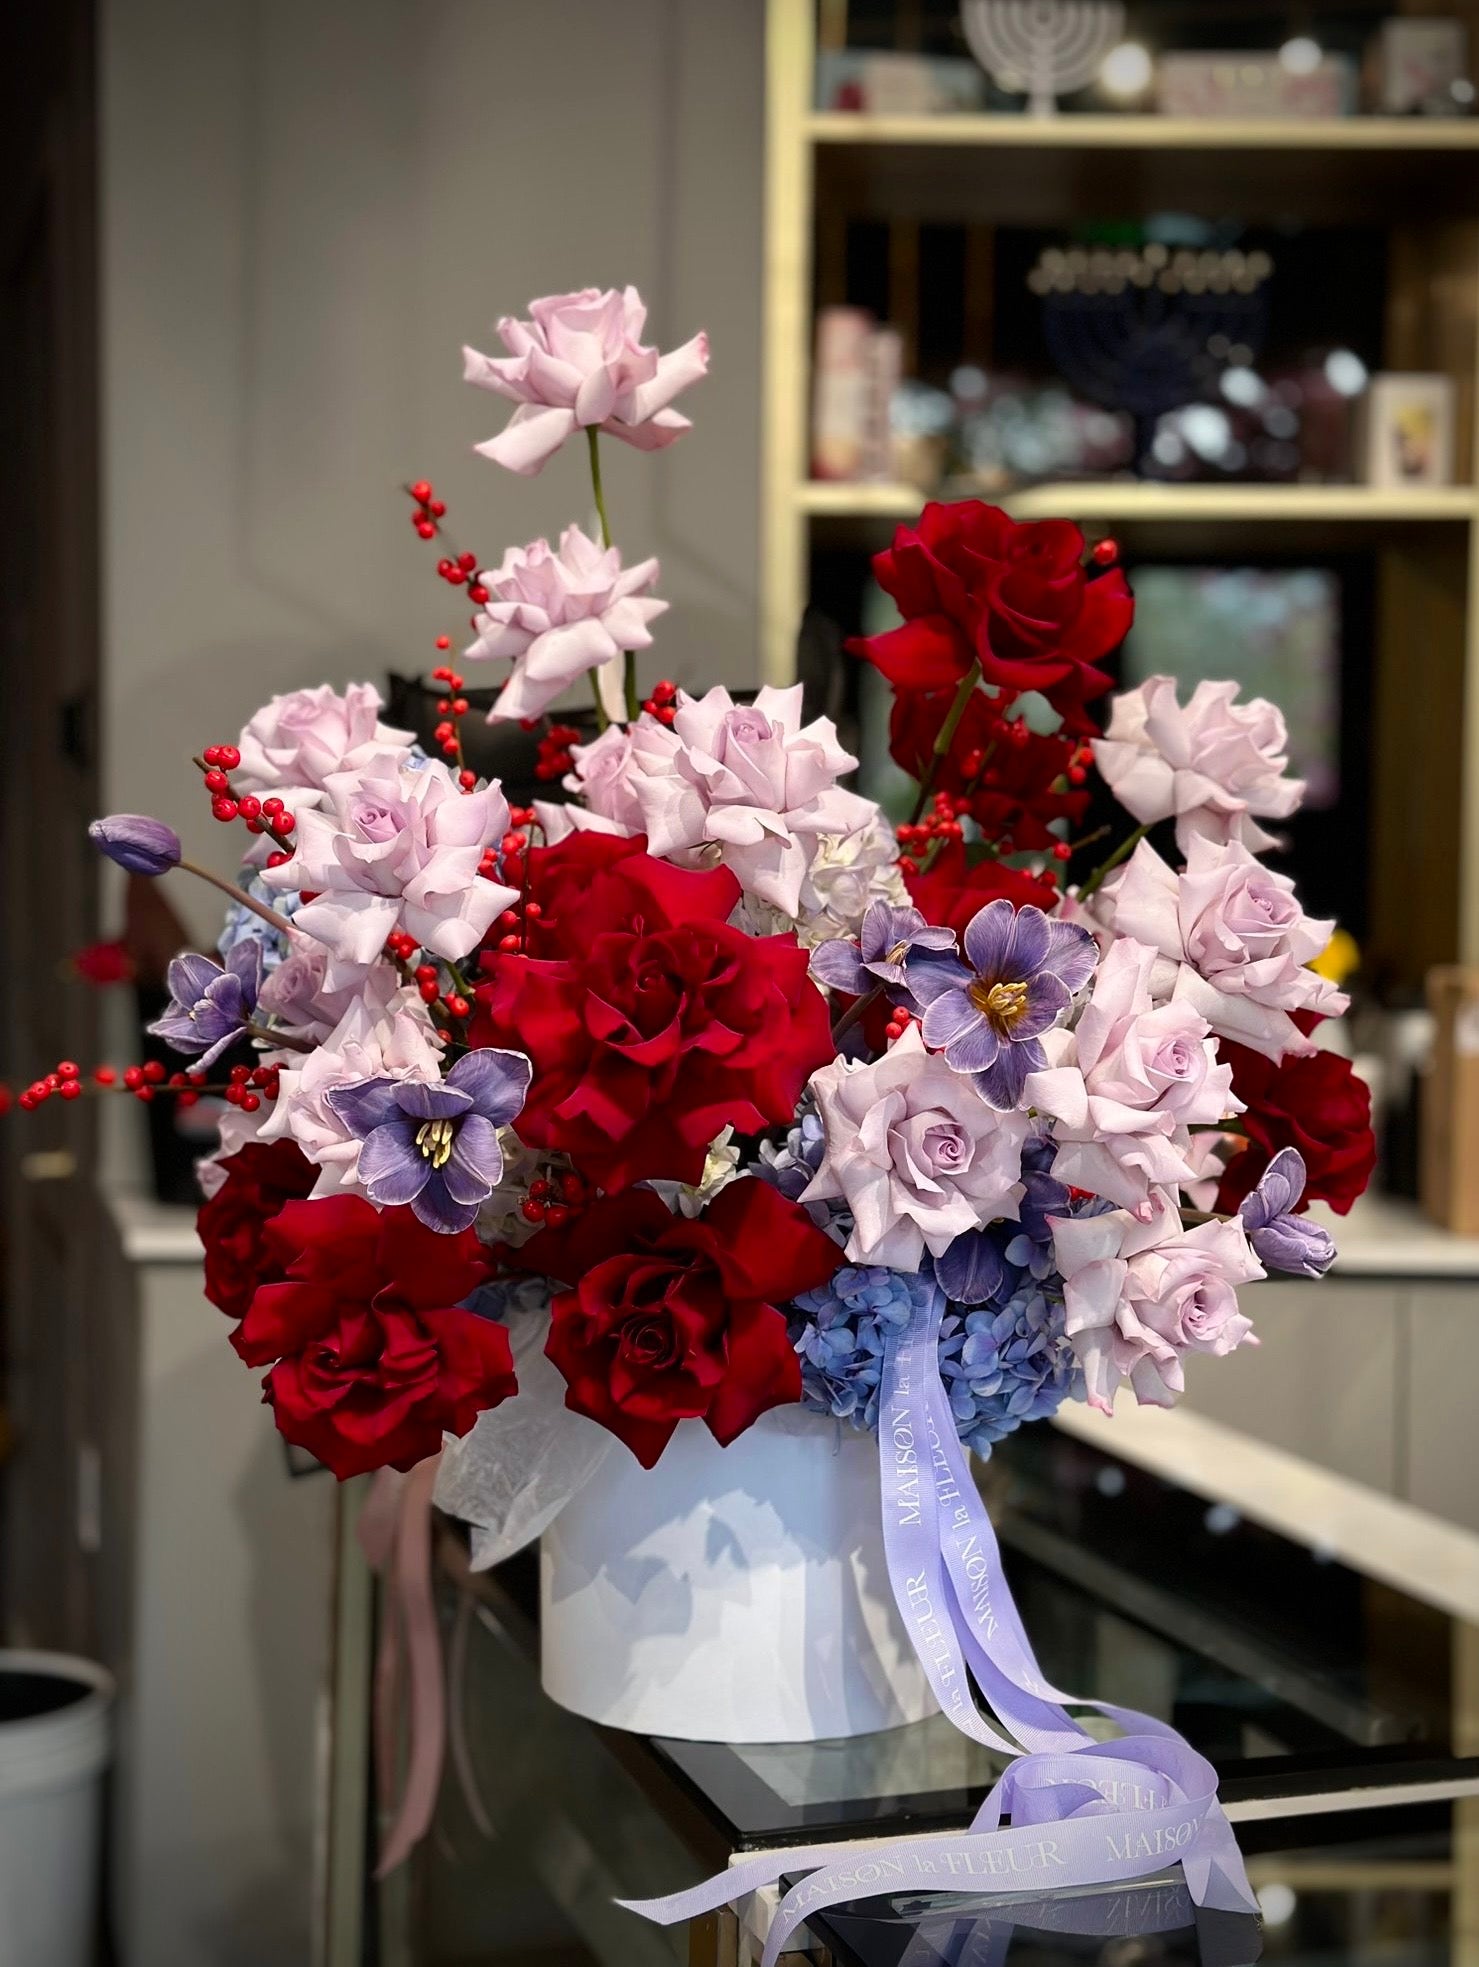 Royal Affair - Jumbo hydrangeas, Garden red roses, European carnation, European lisianthus